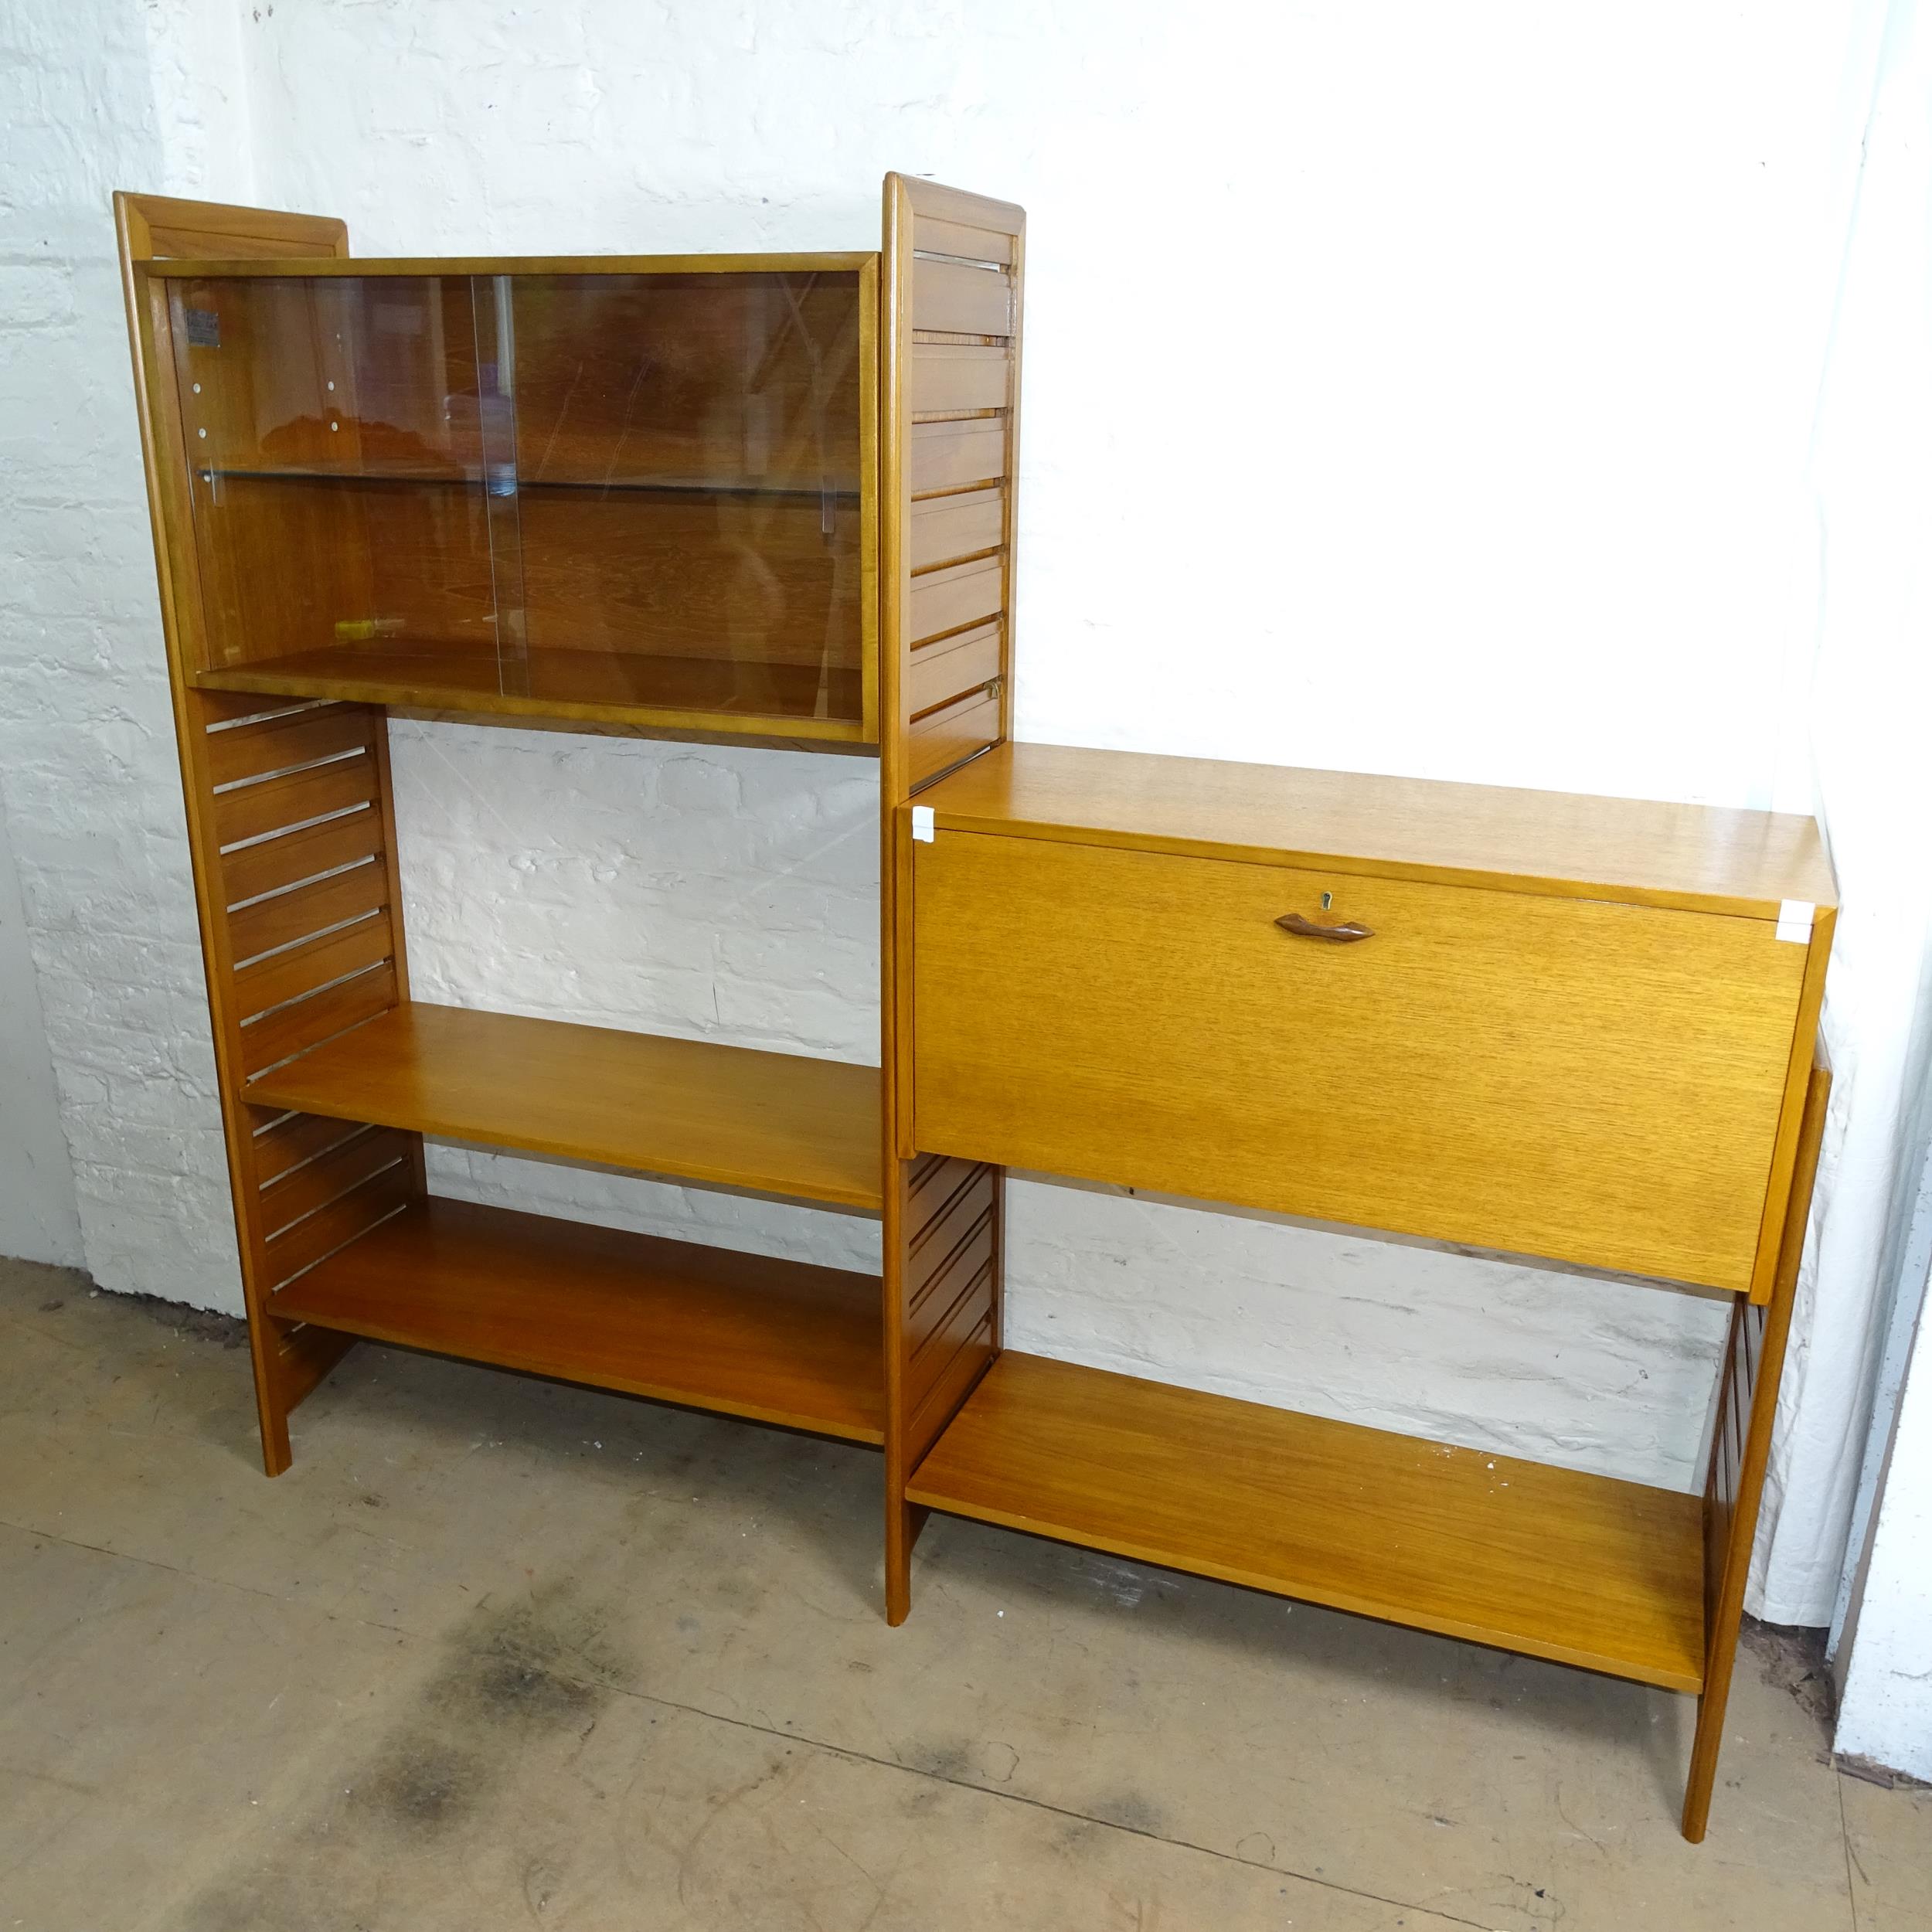 A mid-century teak Staple's ladderax modular system comprising of bureau desk, glazed cabinet and